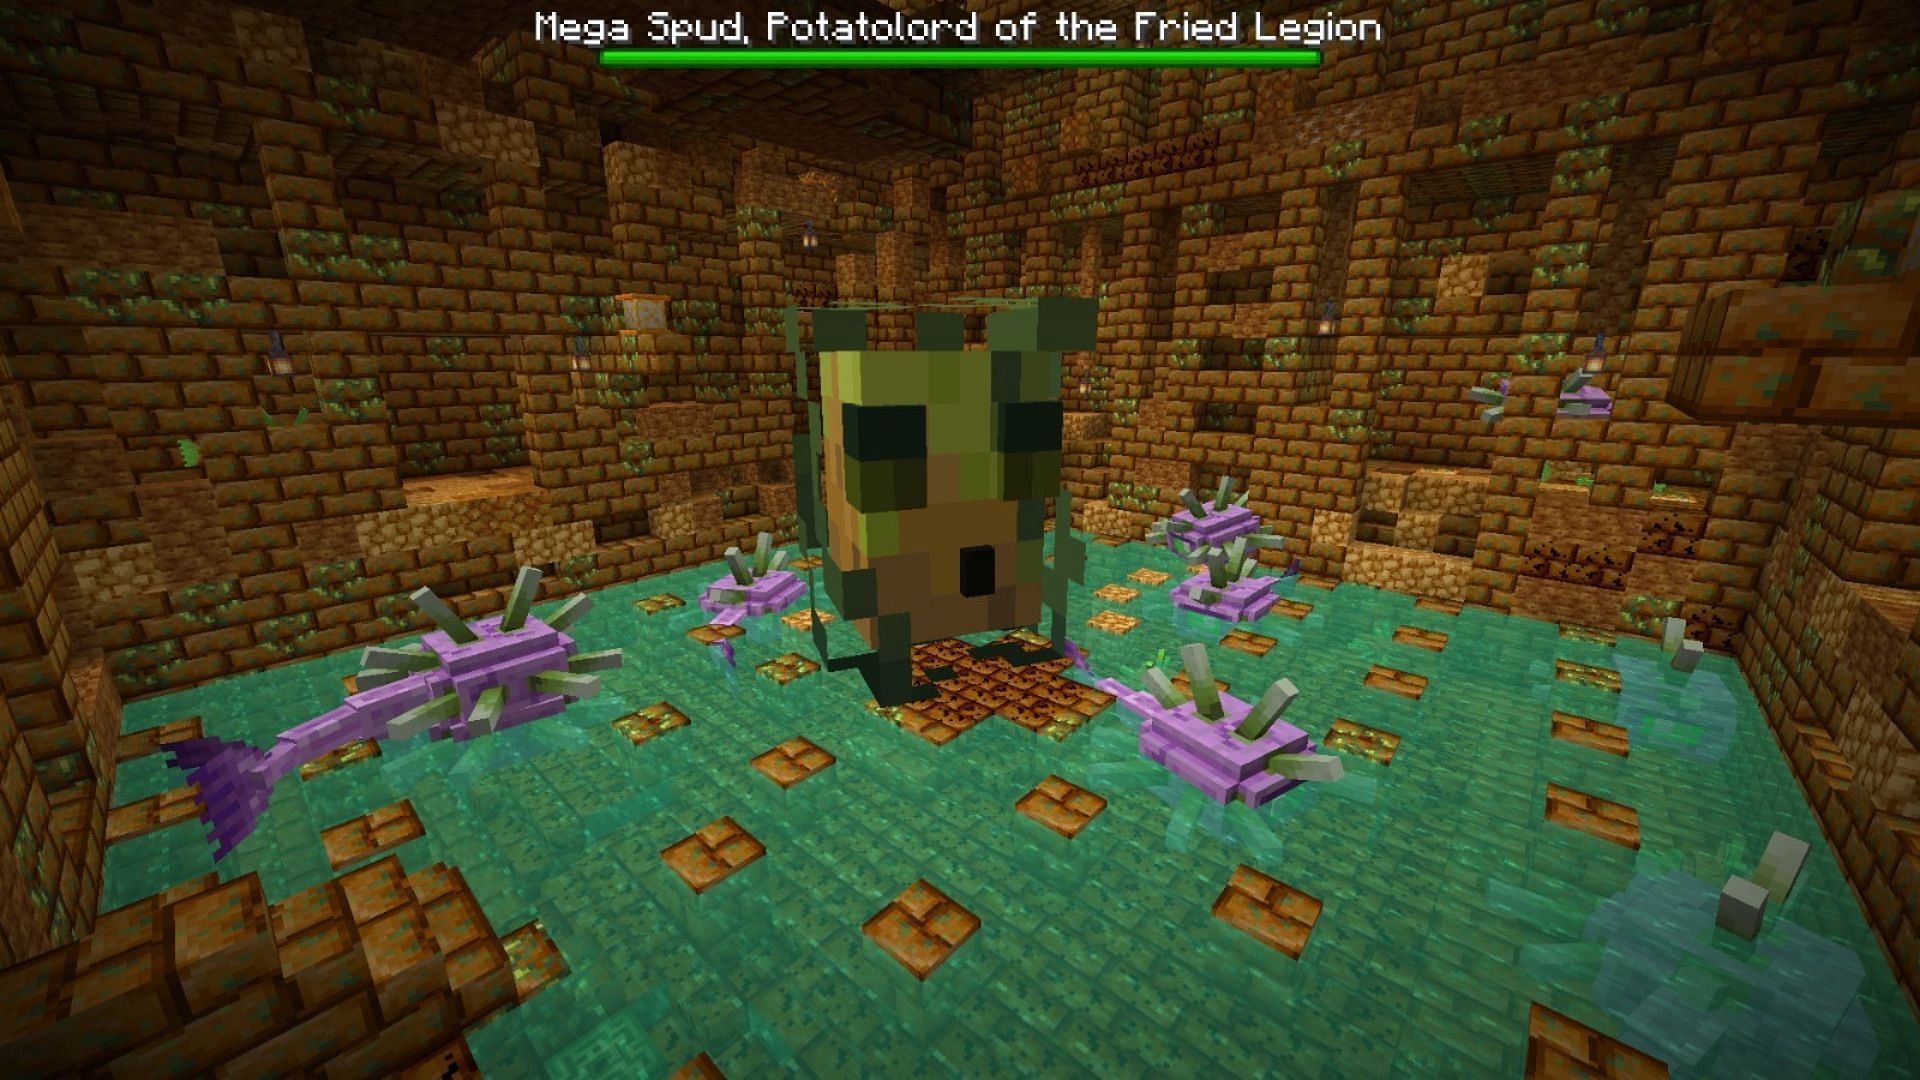 The Minecraft potato boss